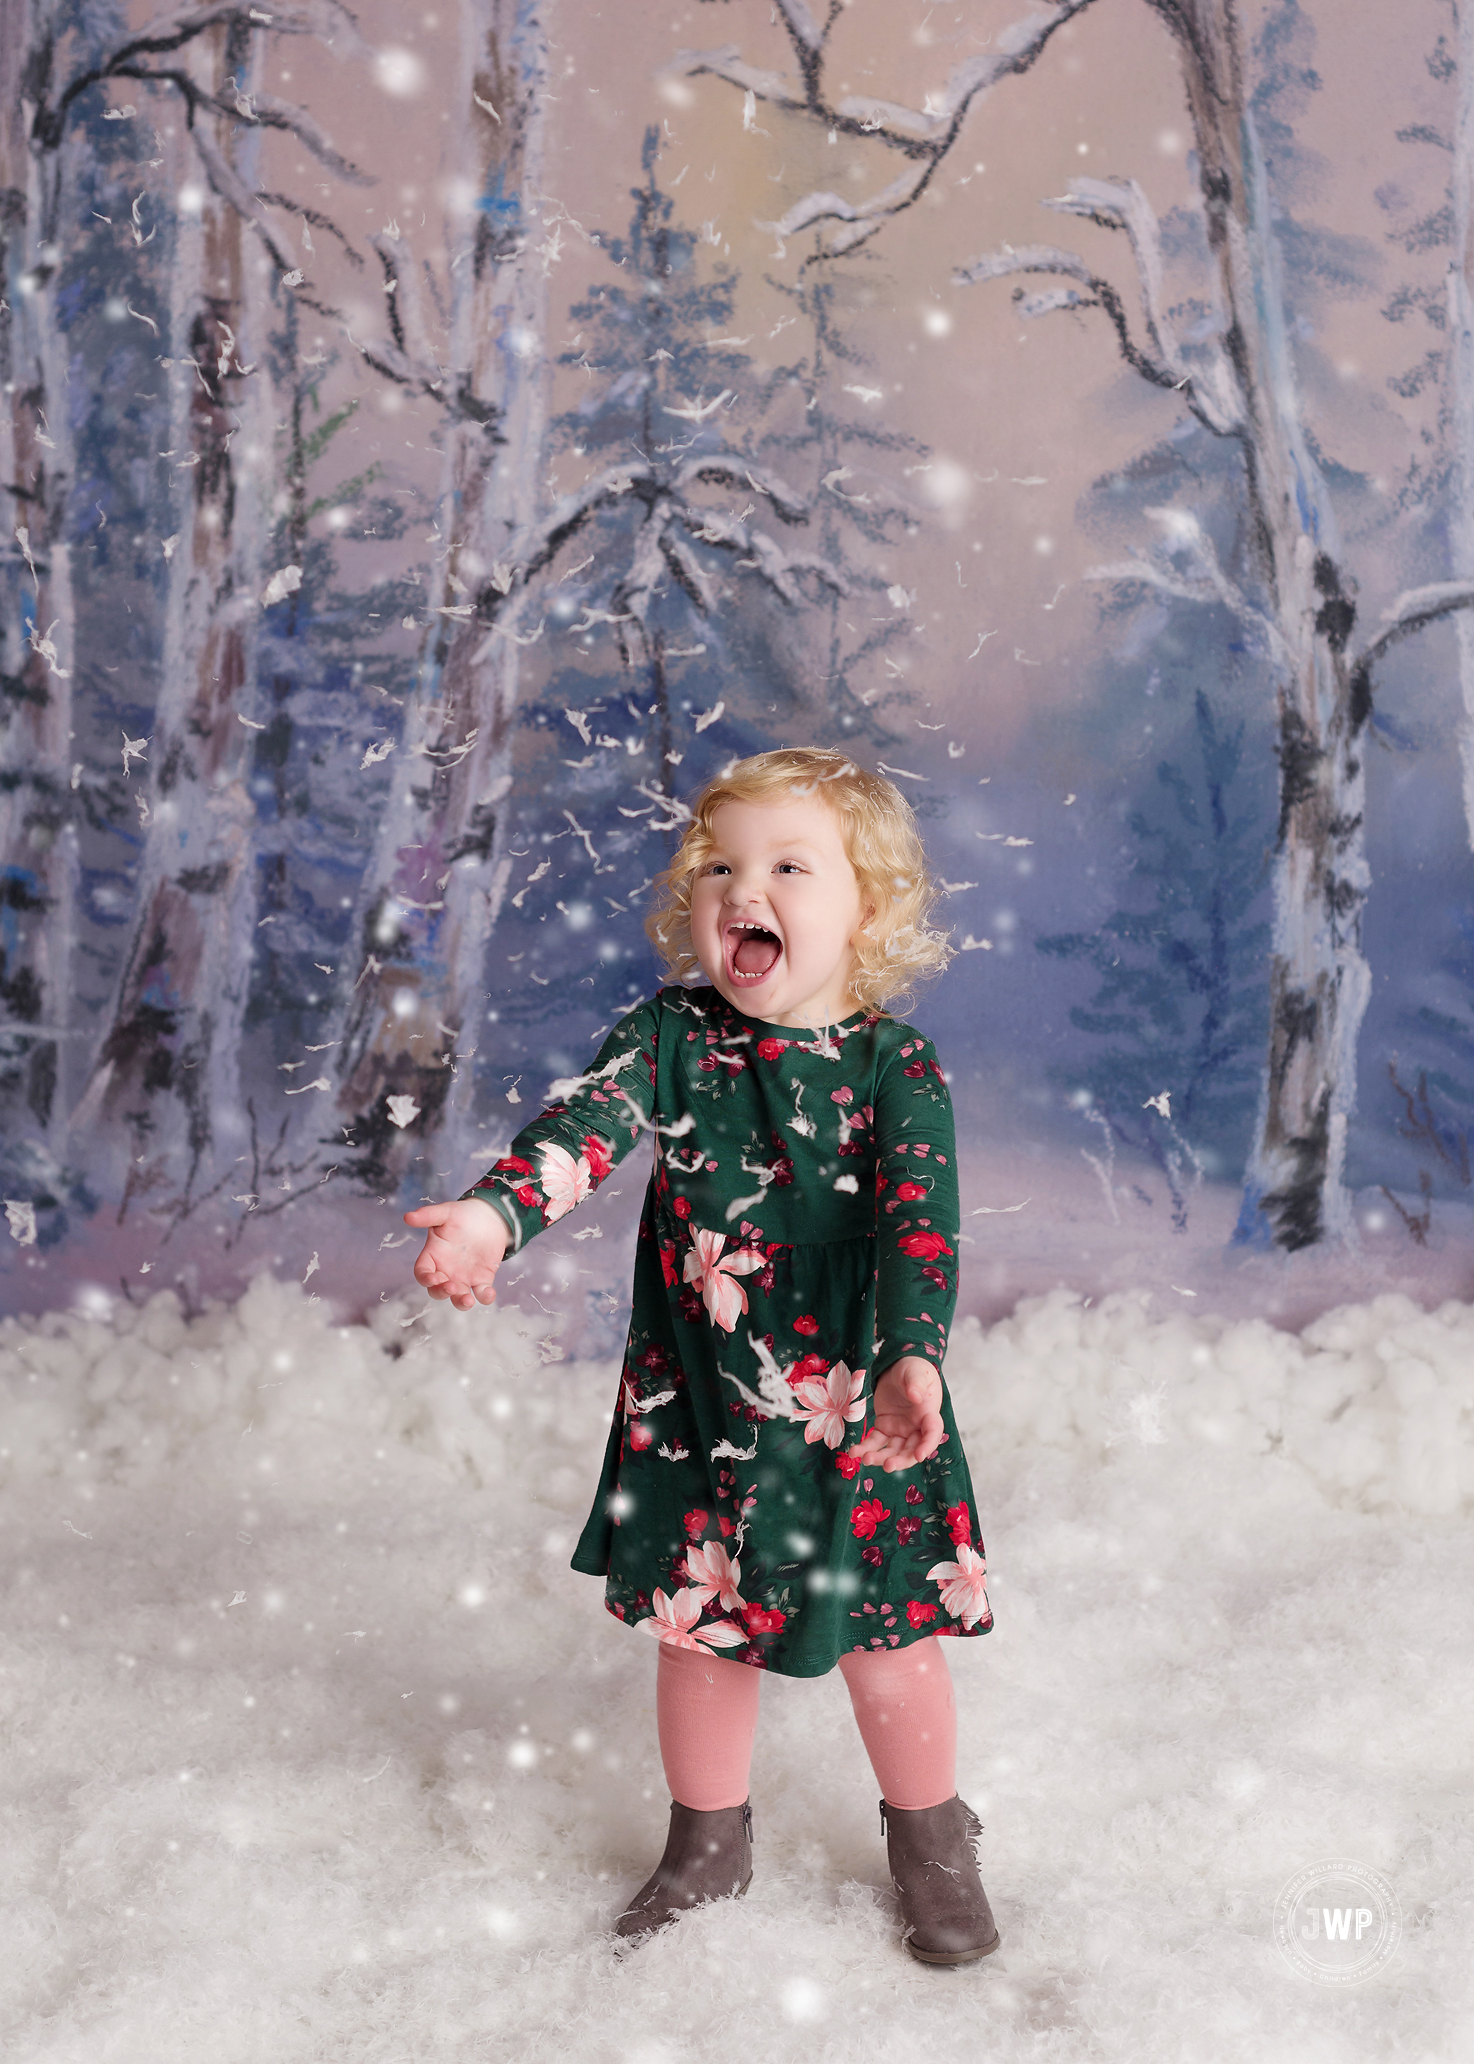 little girl laughing green dress falling snow Winter scene Kingston mini session photography